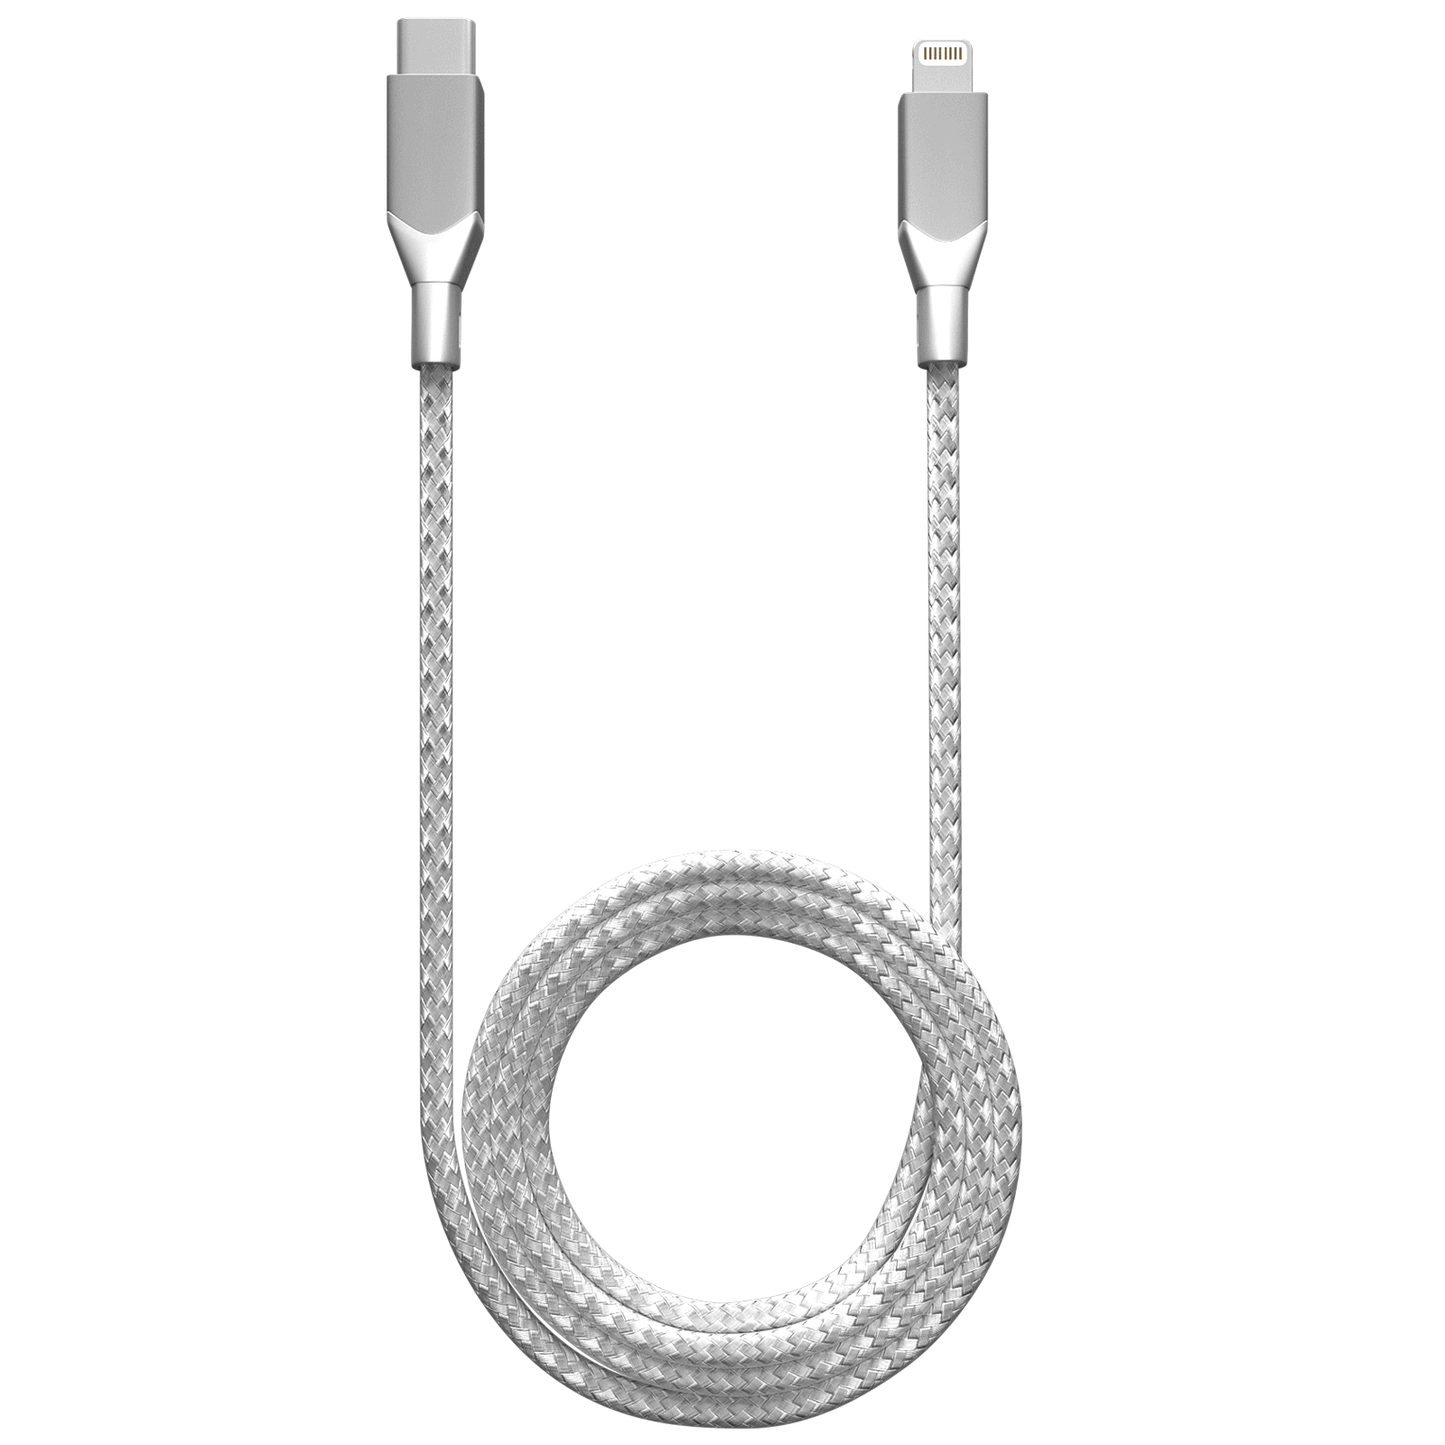 Ampsentrix USB-C to Lightning Cable